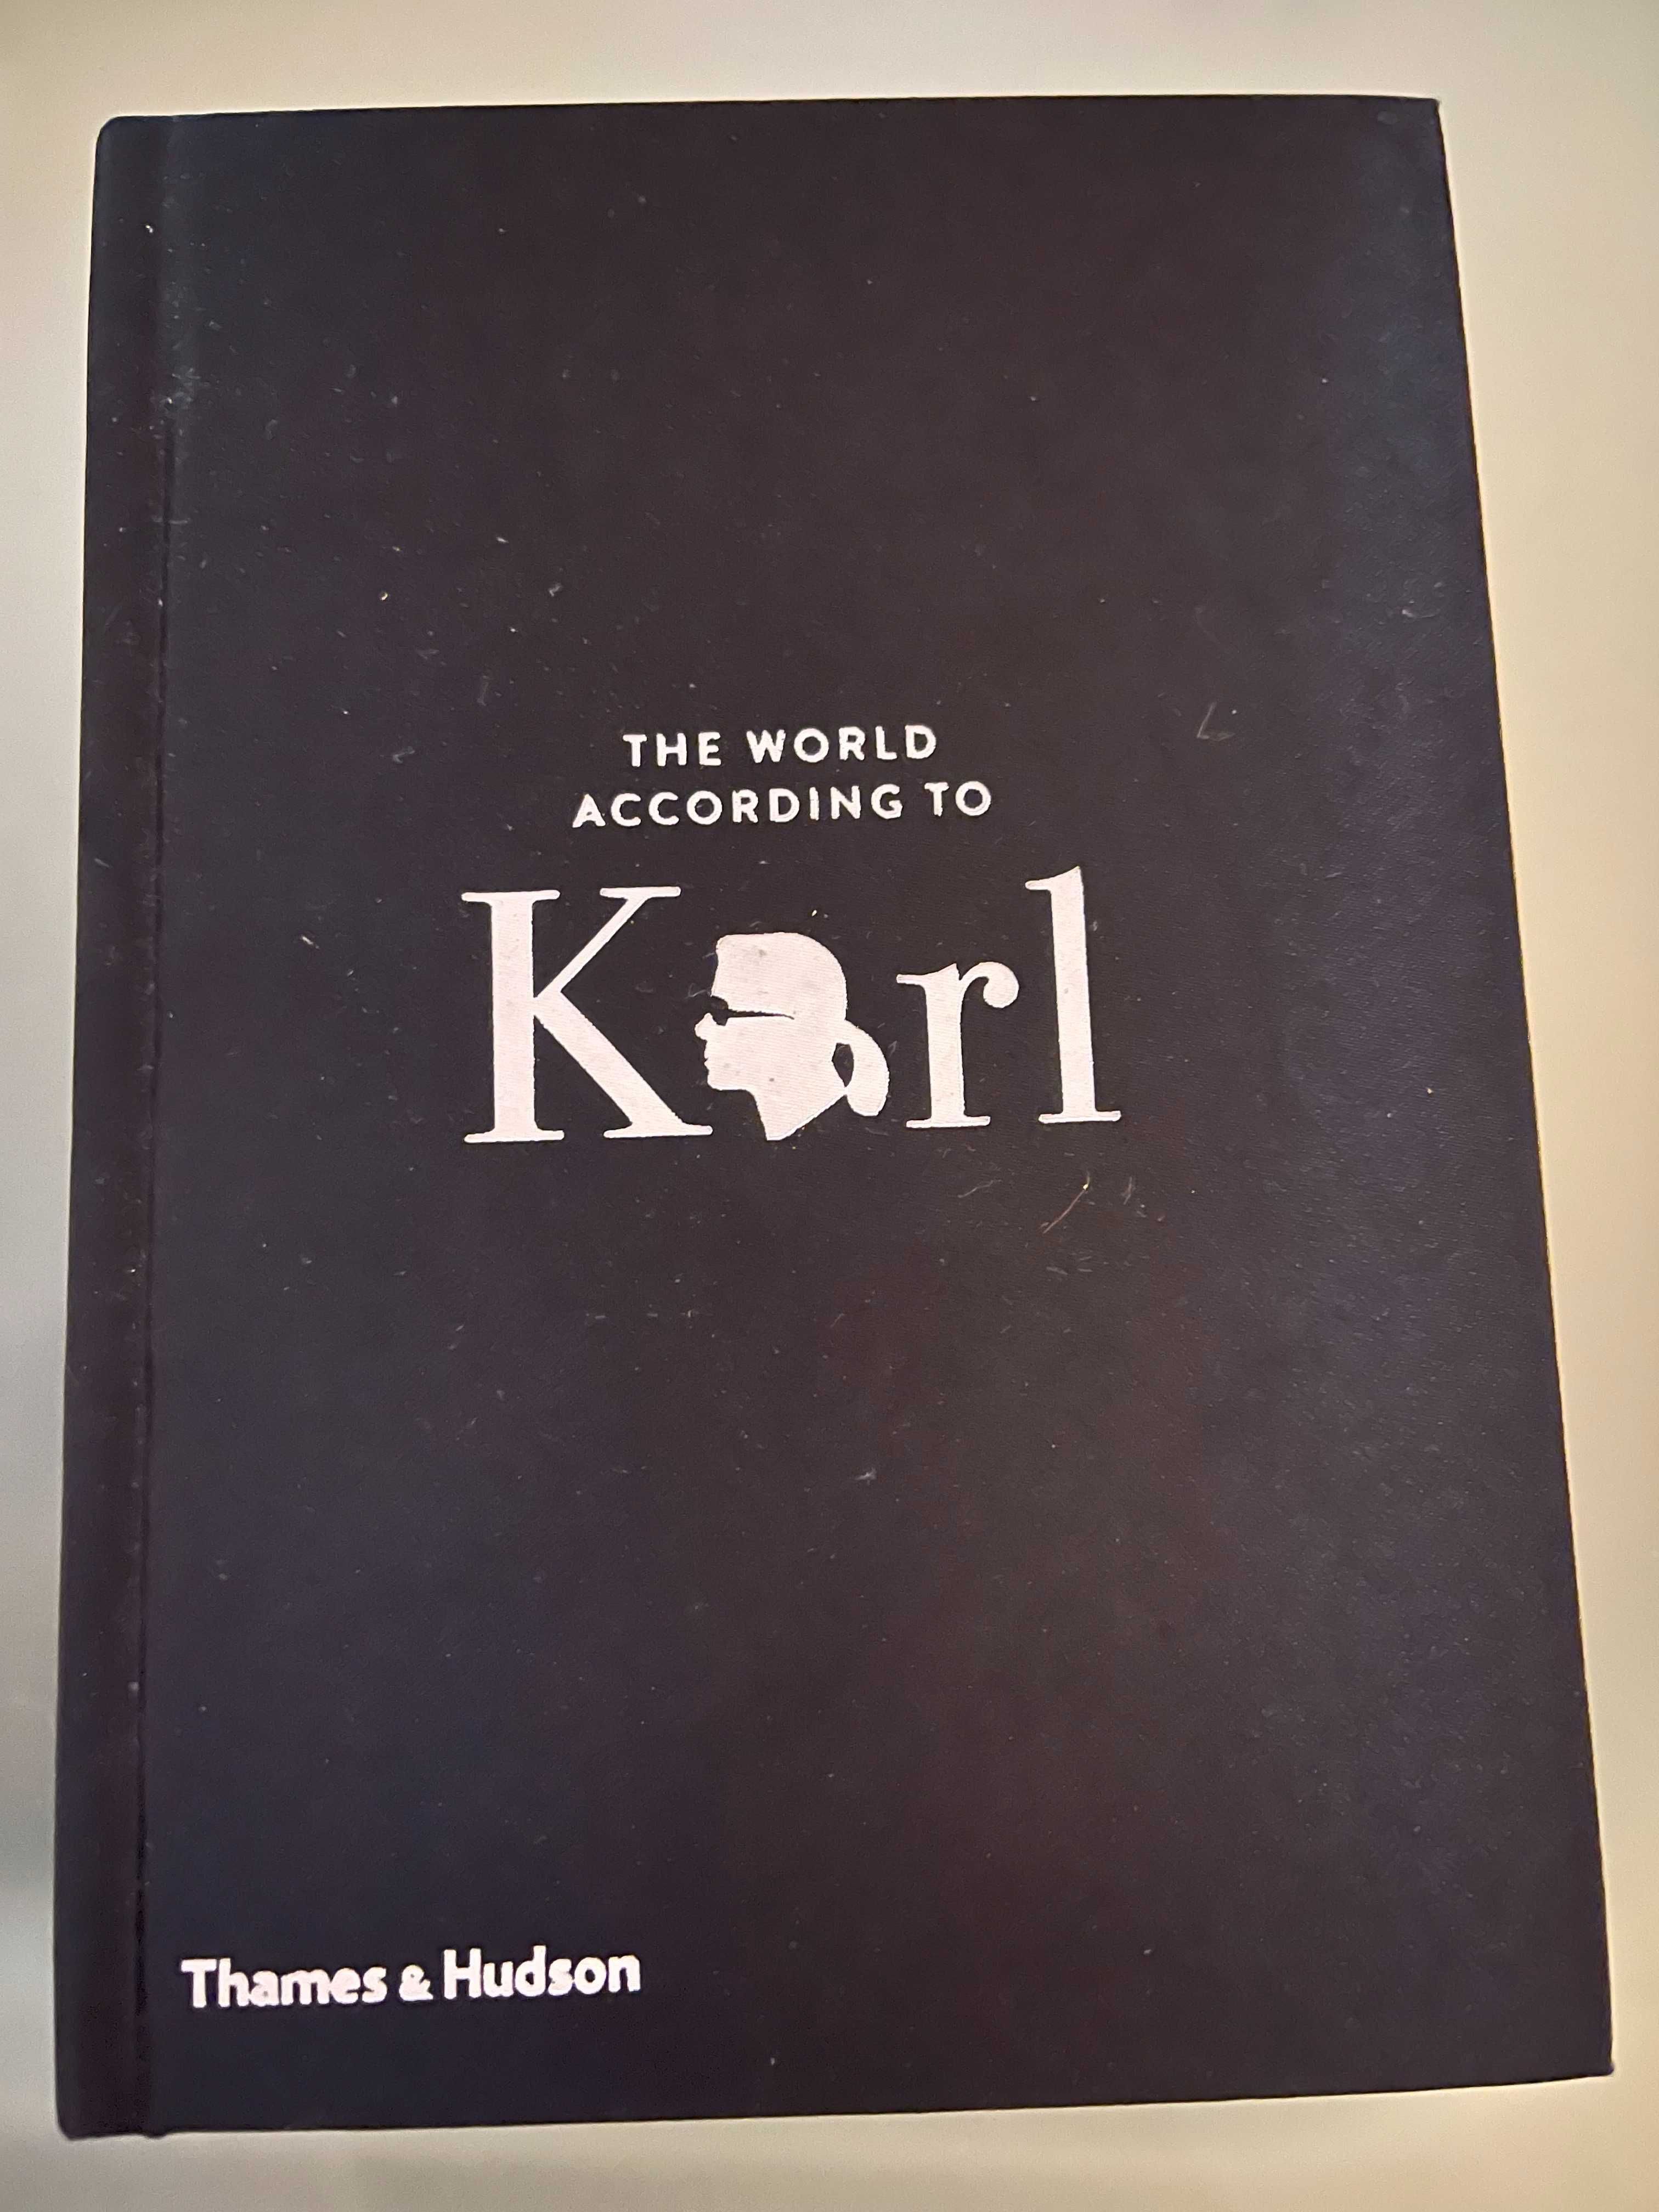 The World according to Karl - Thames & Hudson